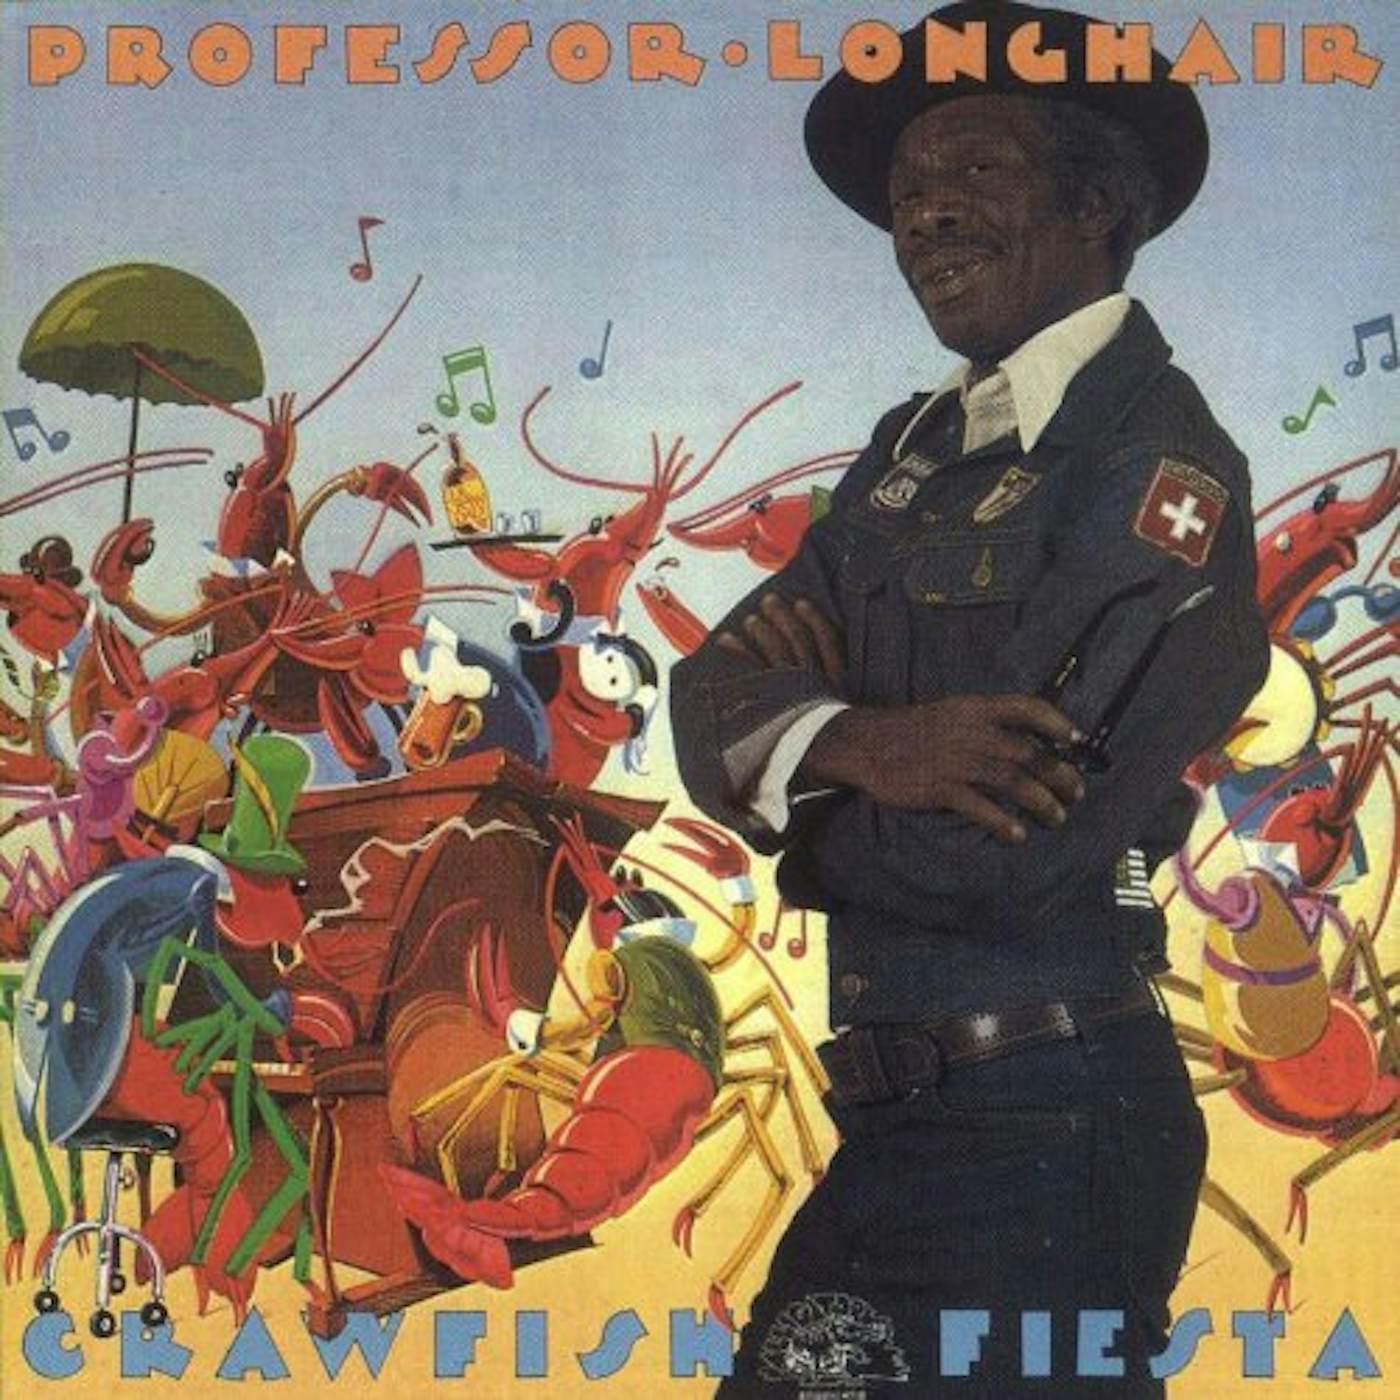 Professor Longhair Crawfish Fiesta Vinyl Record